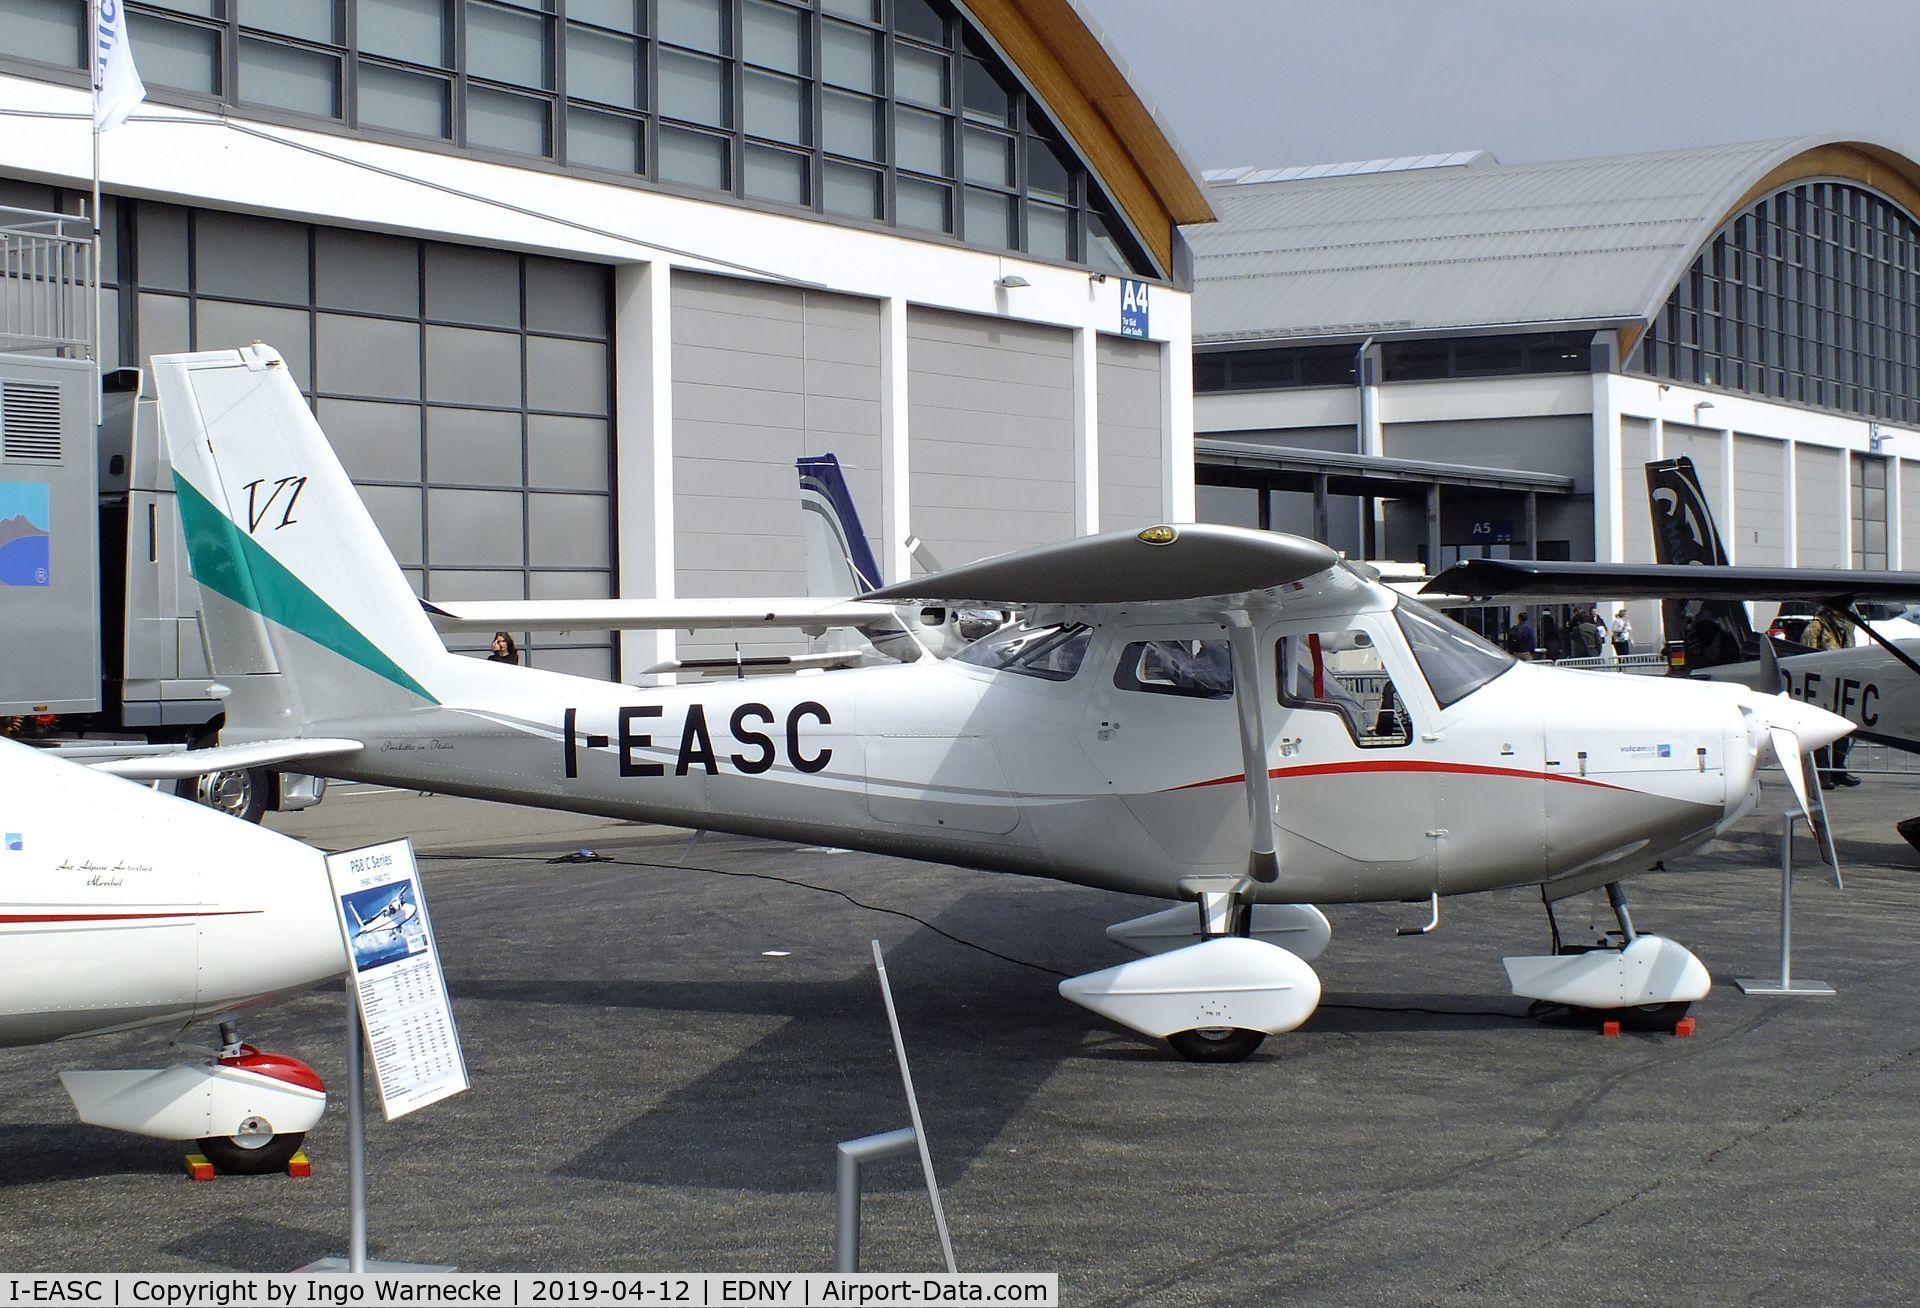 I-EASC, Vulcanair V1.0 C/N 1001, Vulcanair V1.0 at the AERO 2019, Friedrichshafen